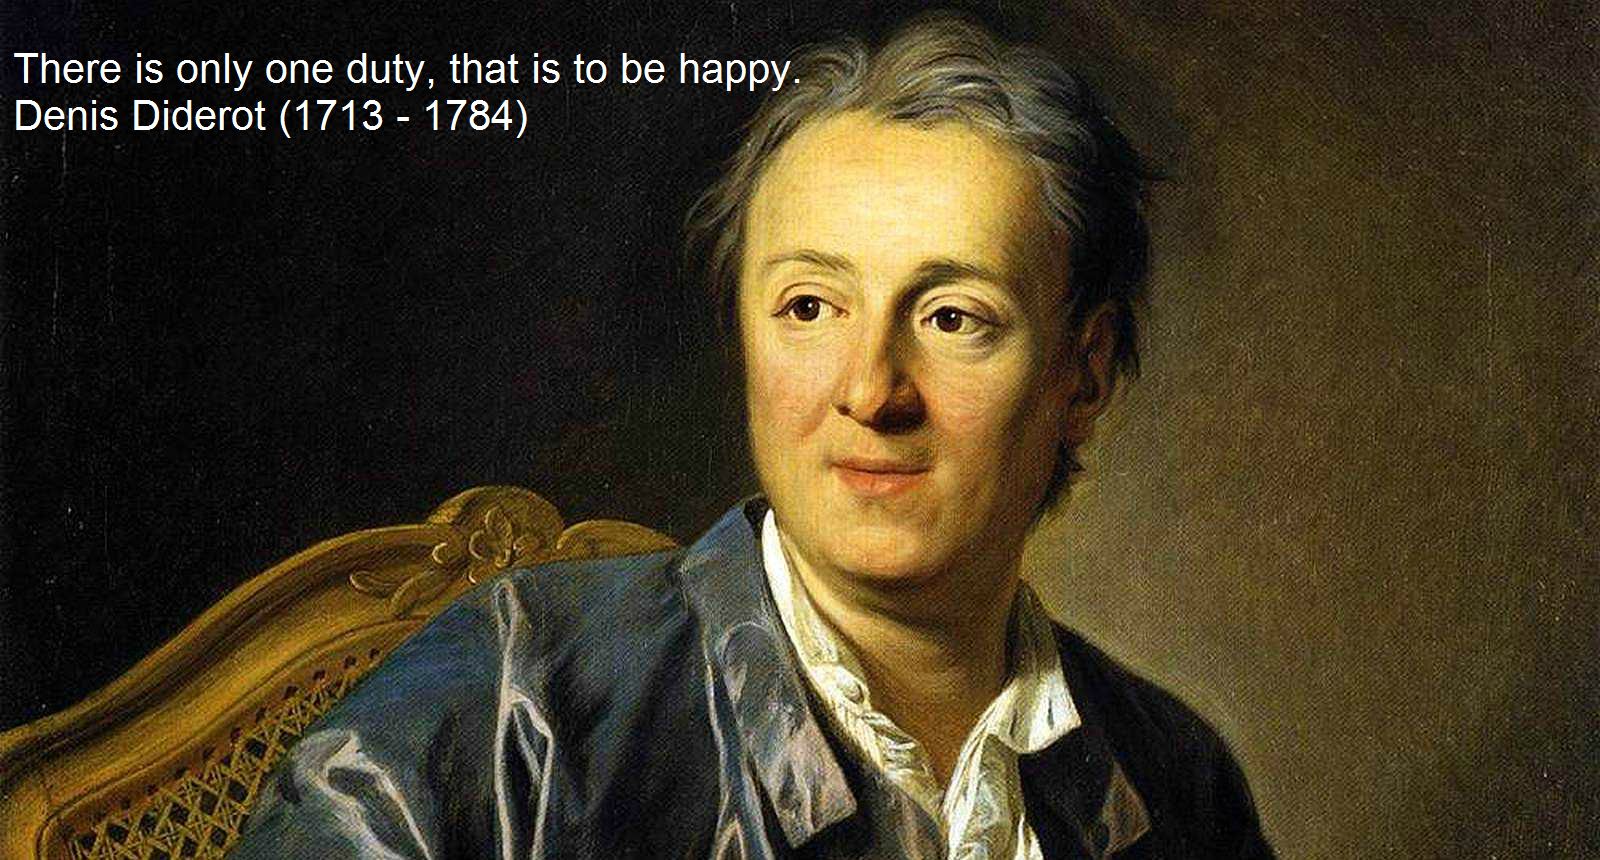 Denis Diderot's quote #2